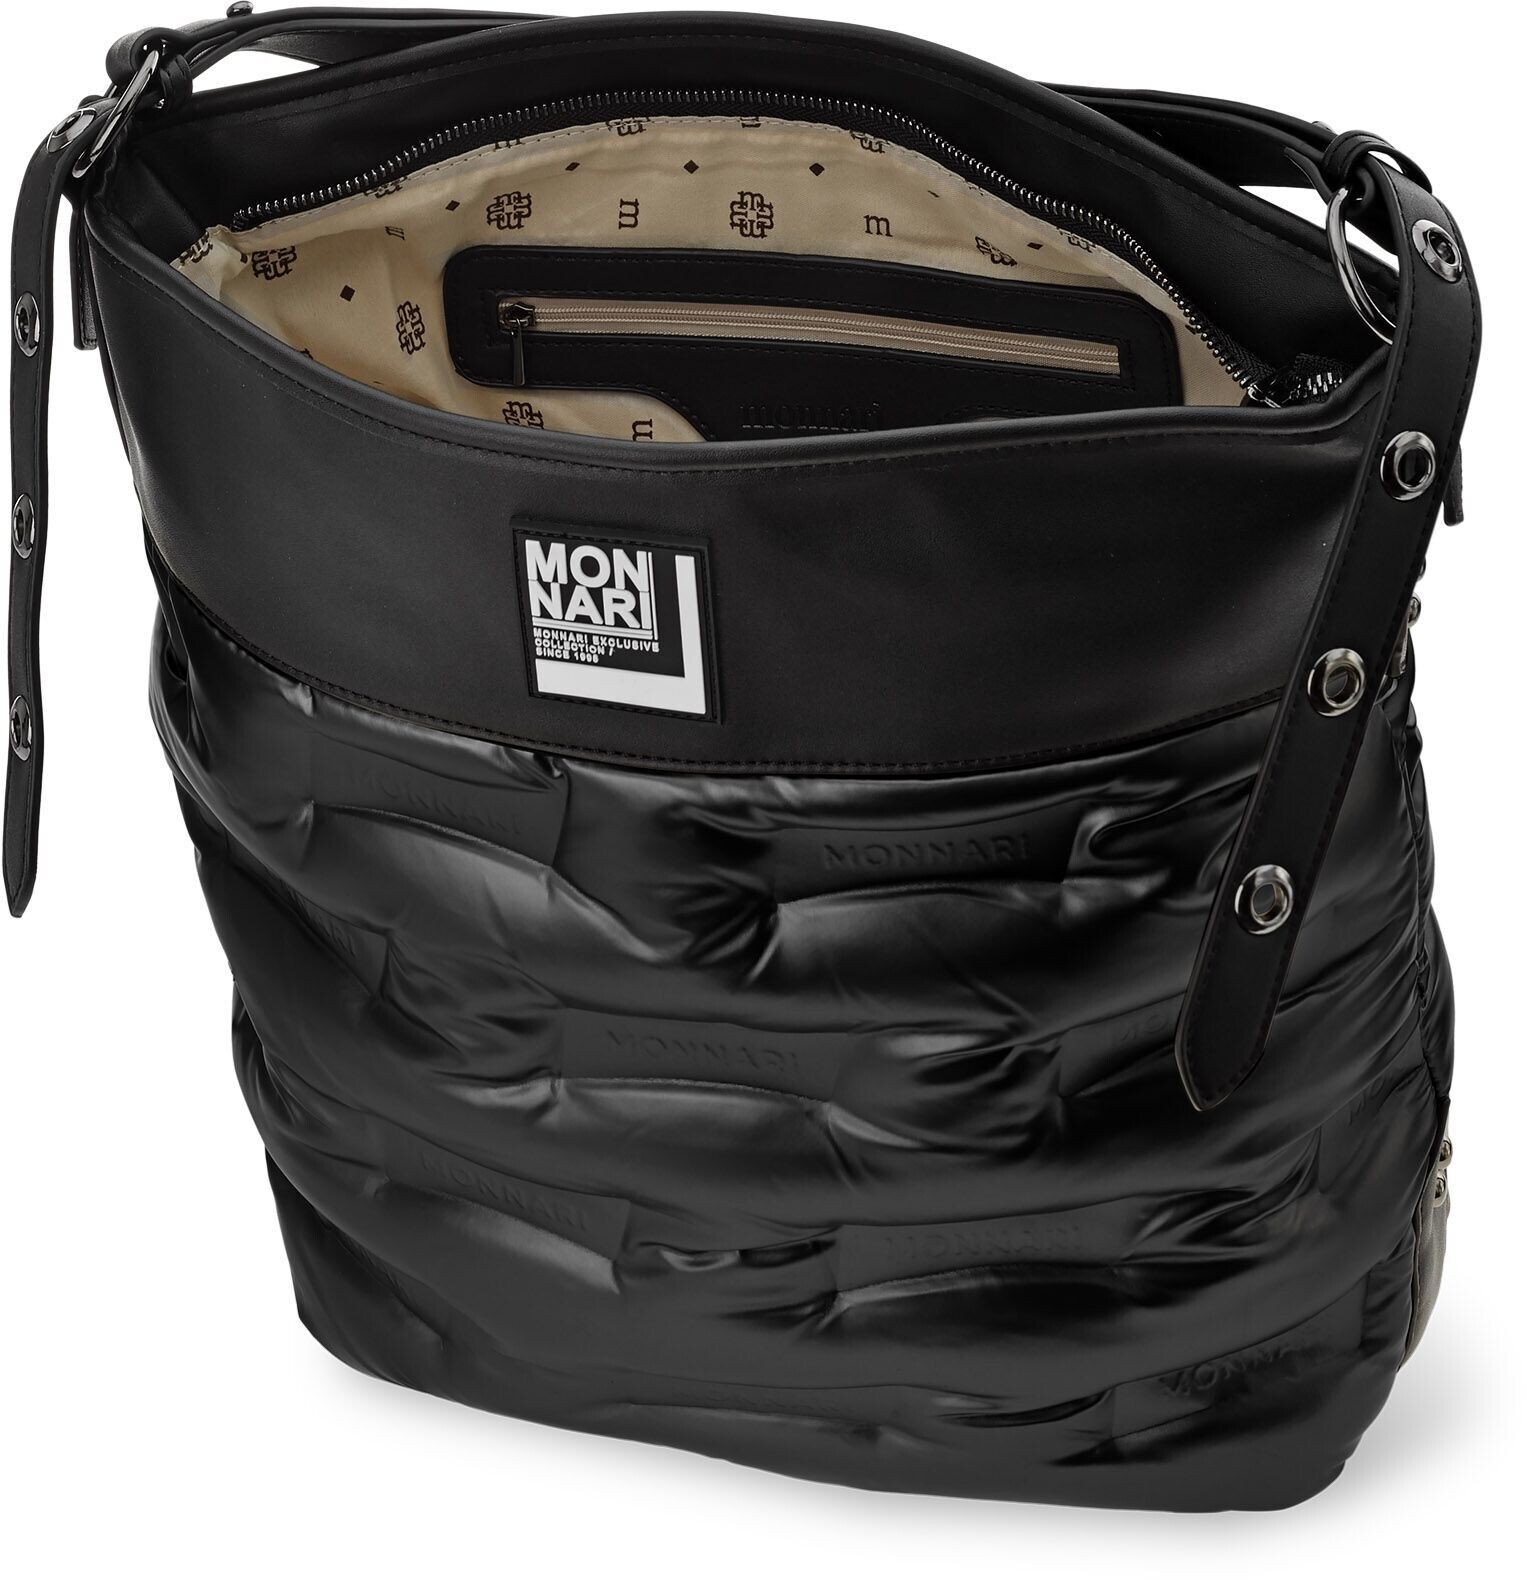 Monnari Damentasche Shopper gesteppt Metallic-Farbe Beuteltasche schwarz